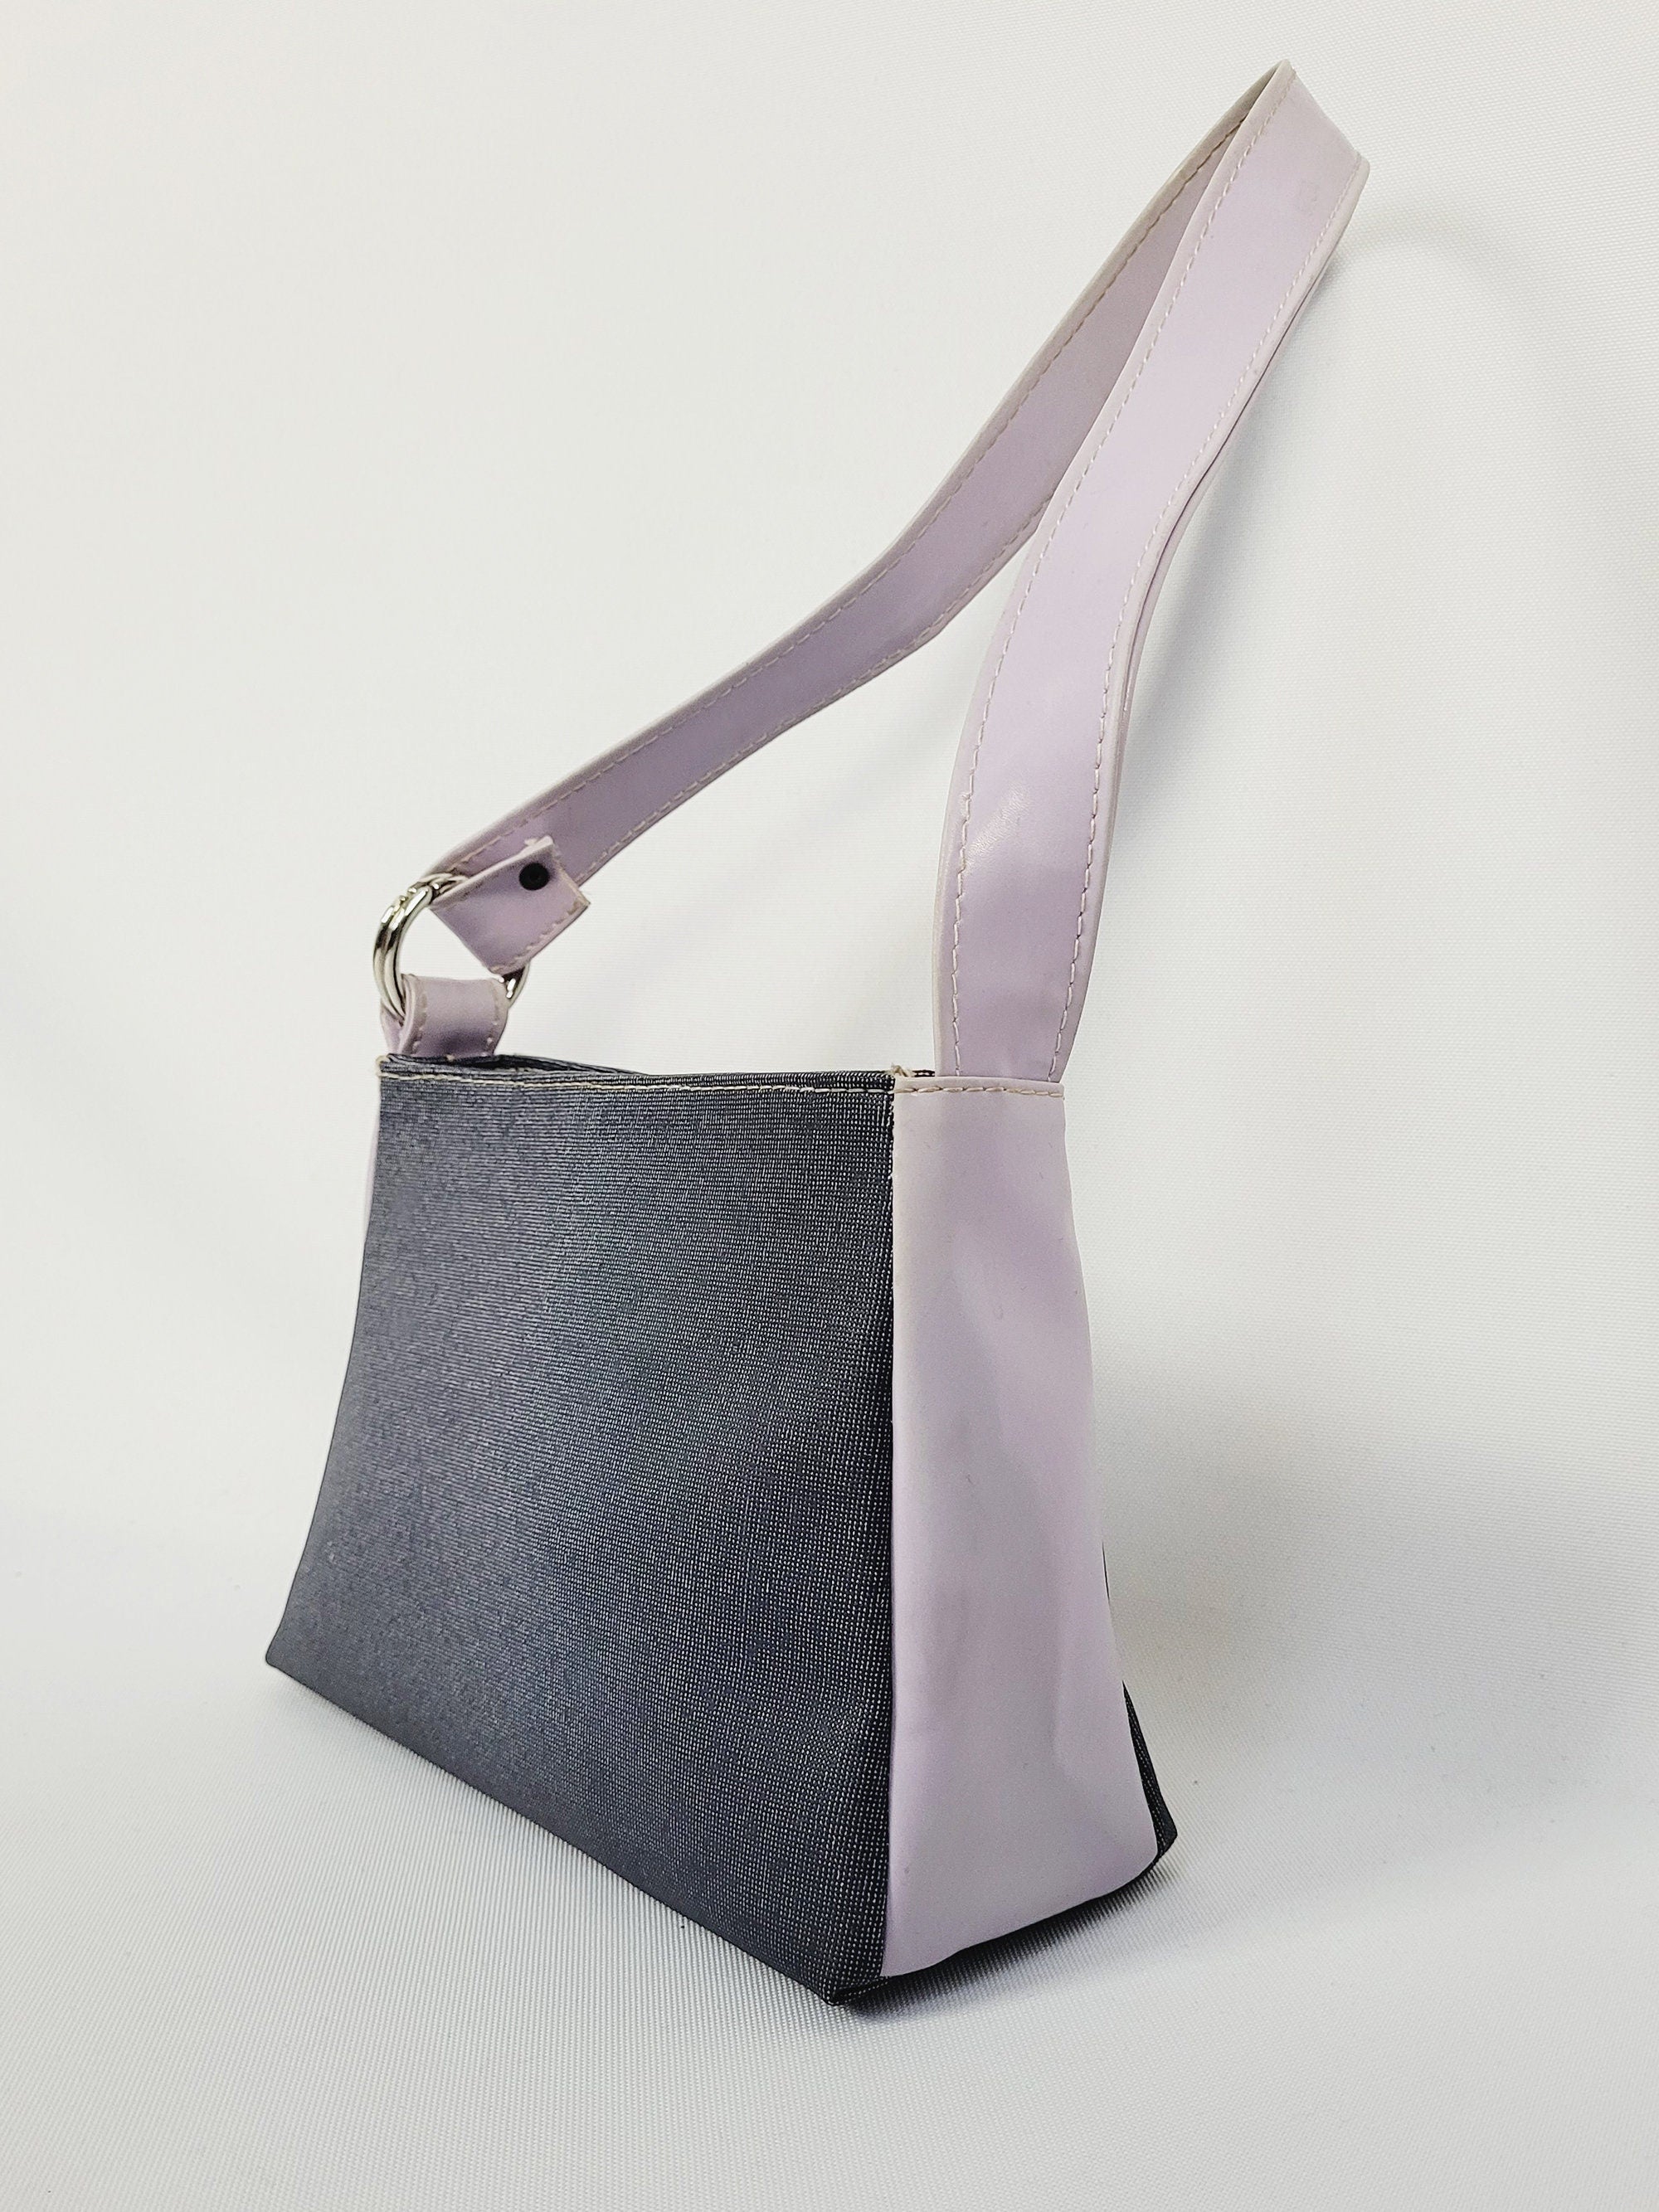 00s Y2K vintage purple & blue square shoulder bag purse